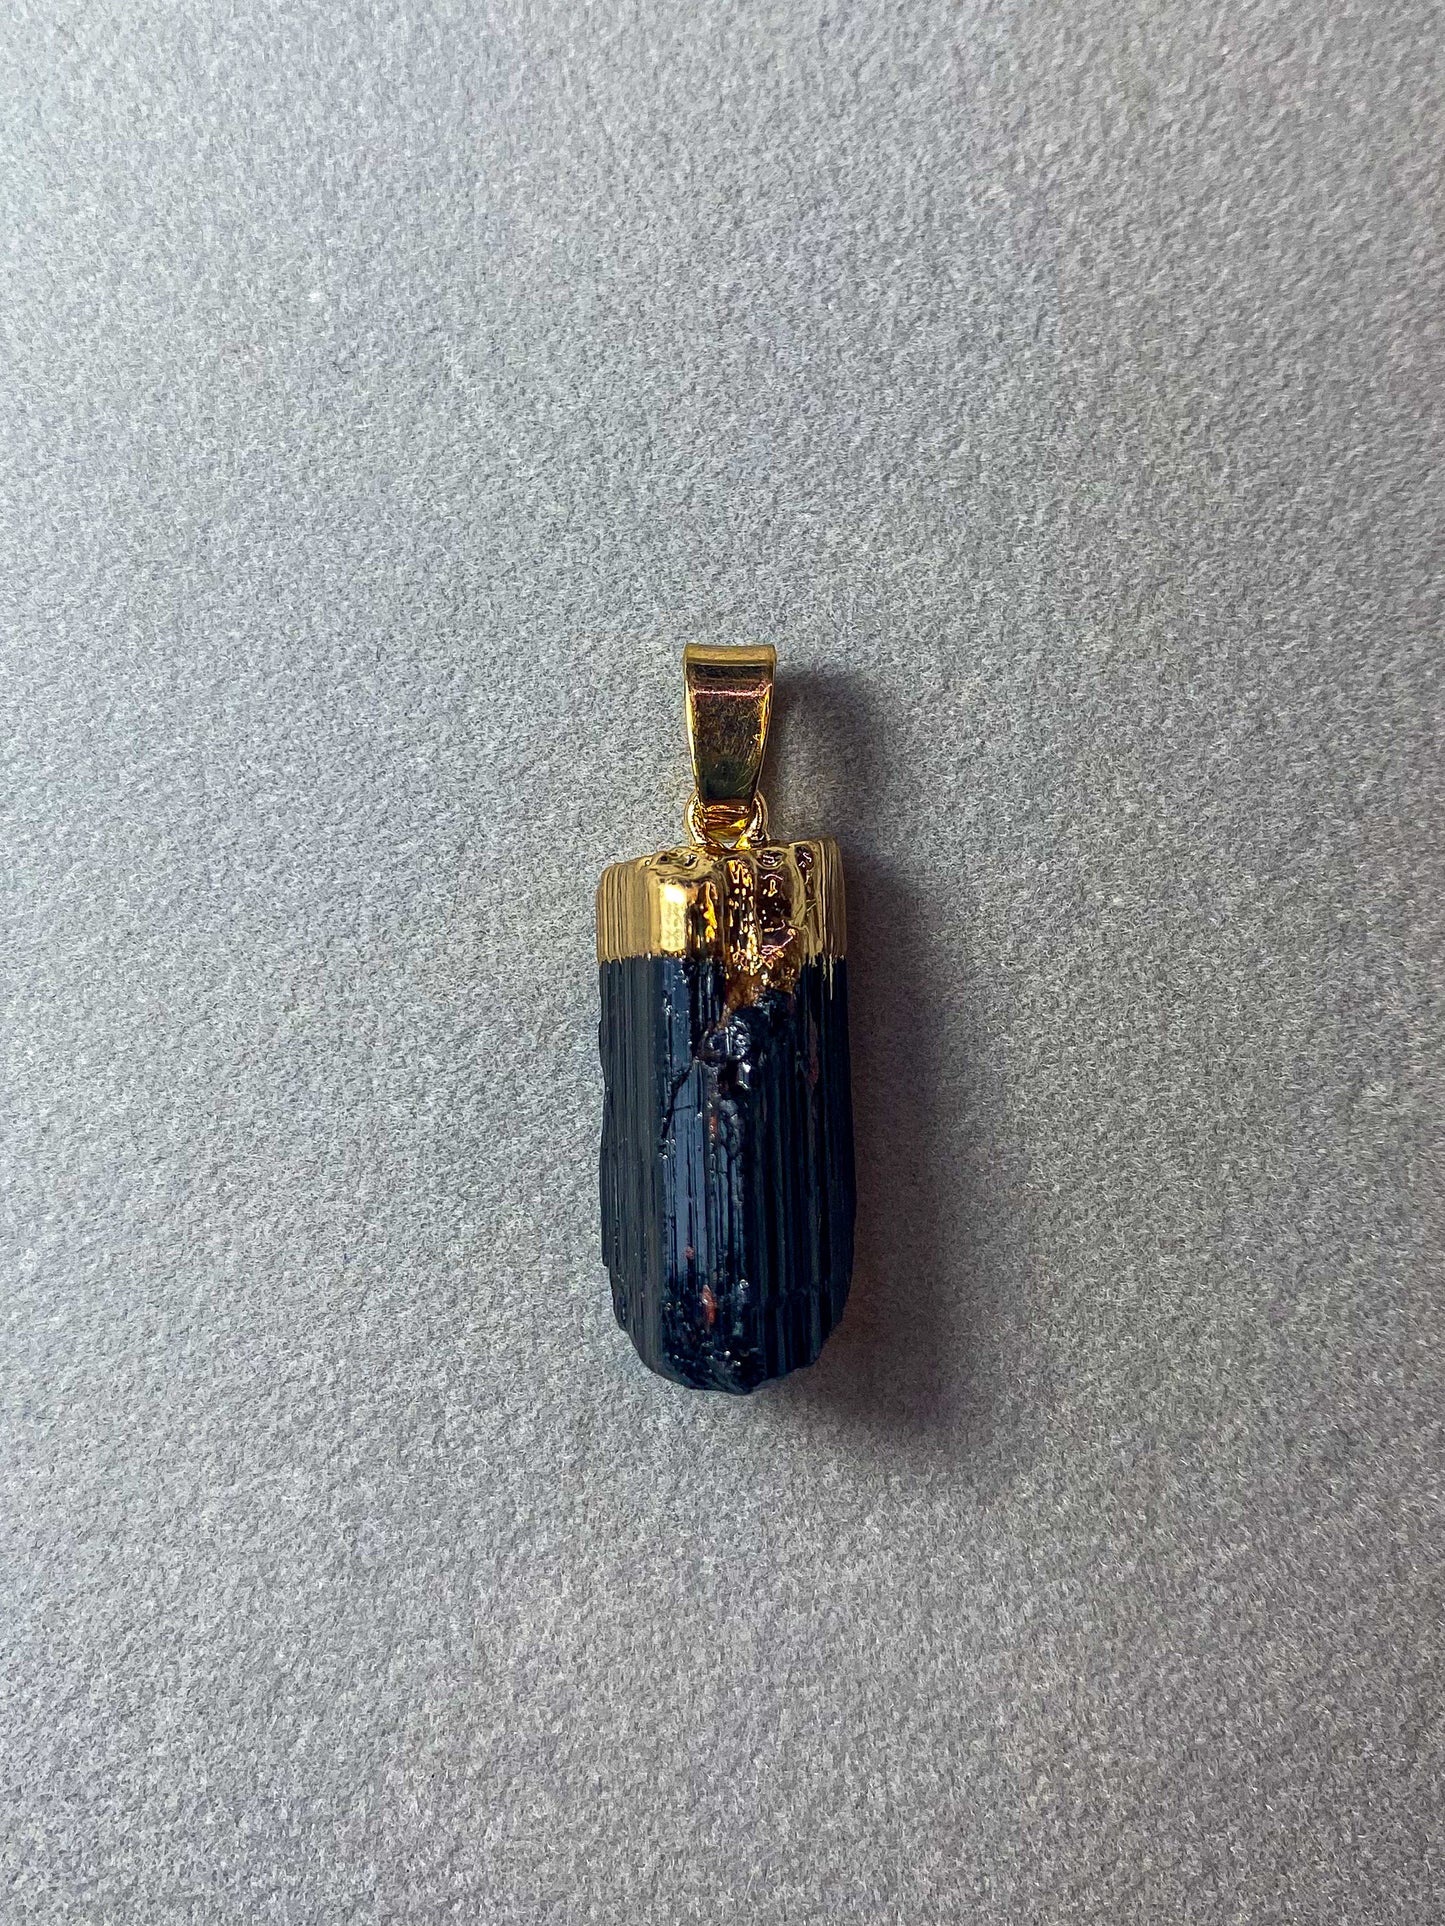 Black Tourmaline pendant